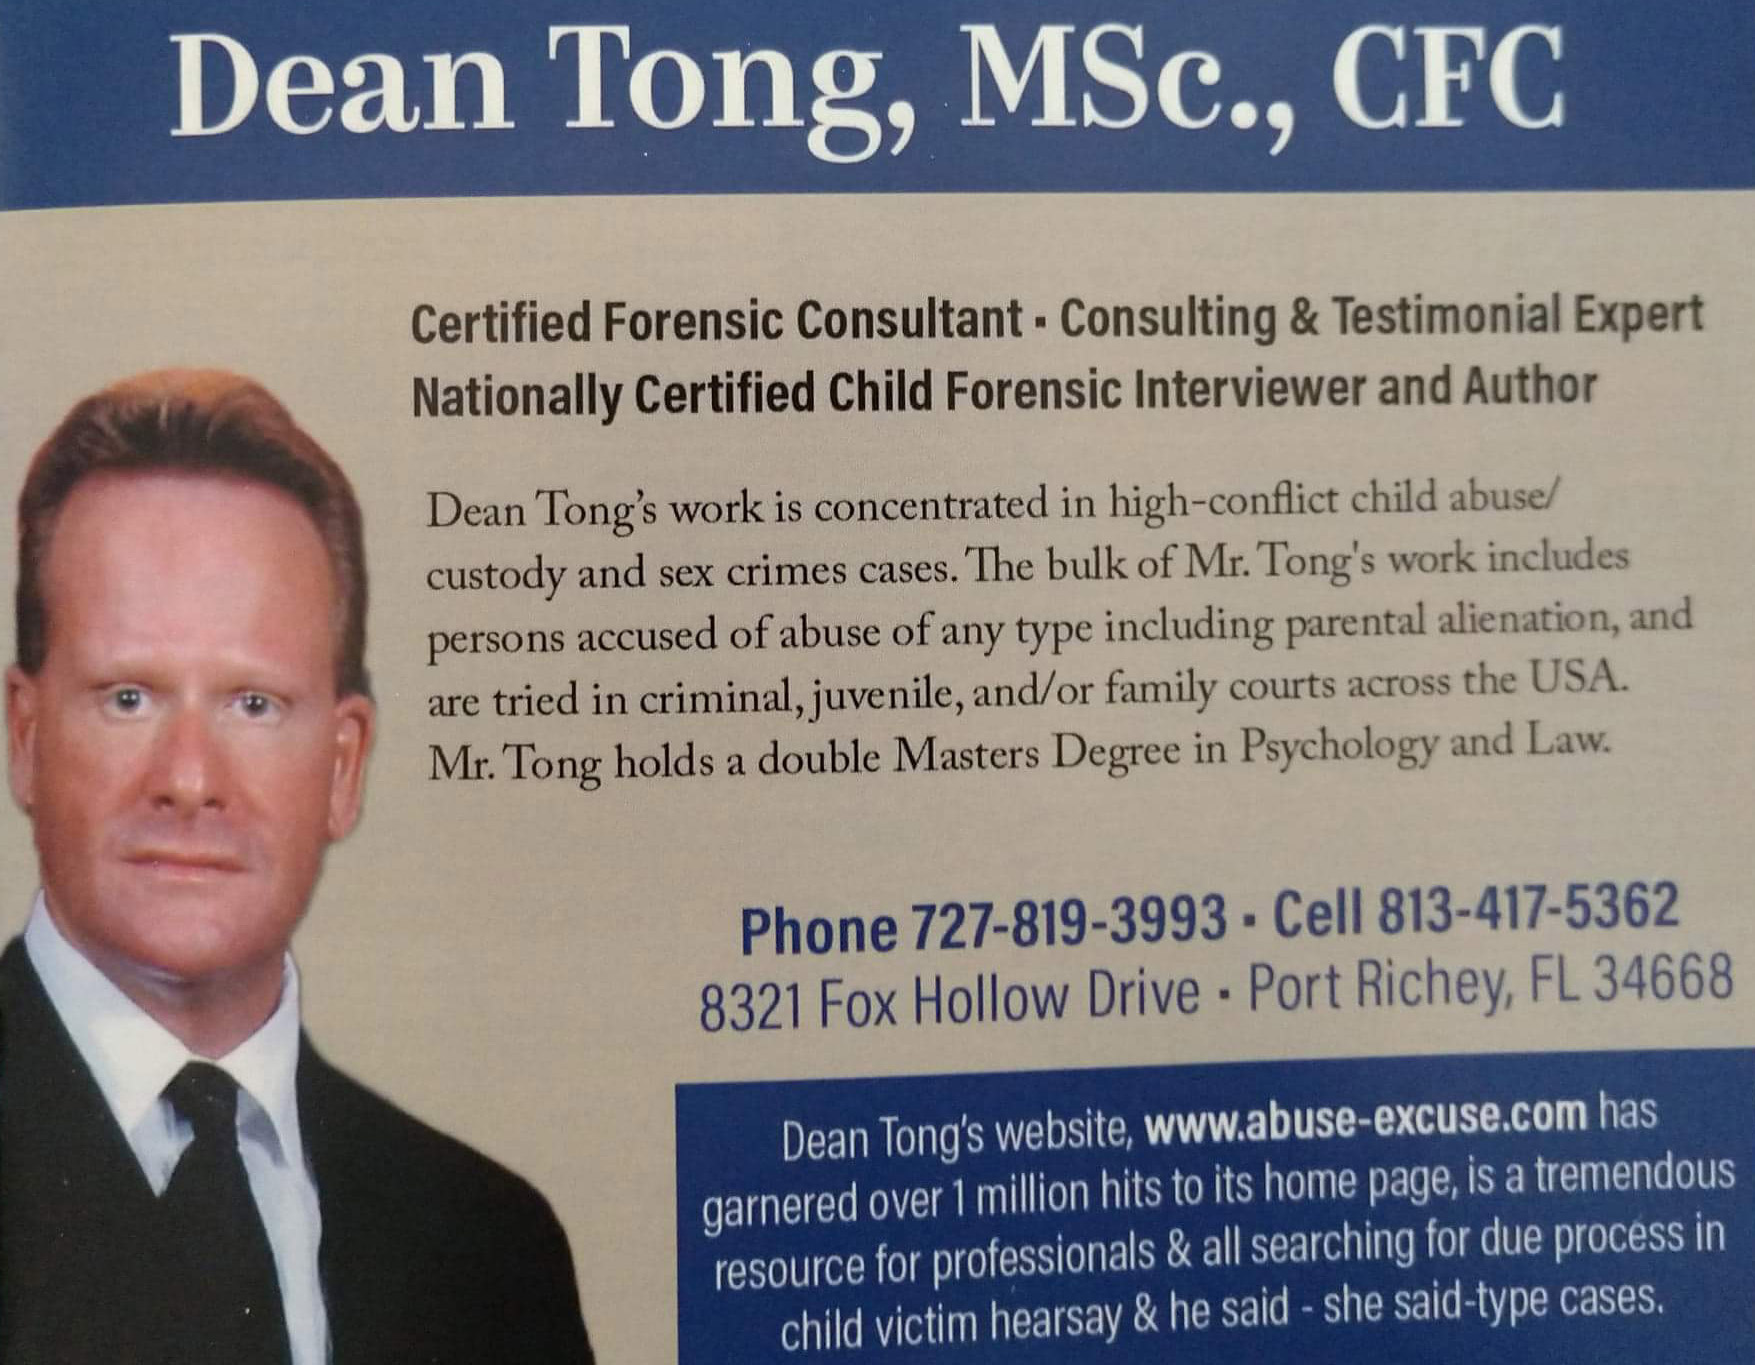 Dean Tong, MSc., CFC